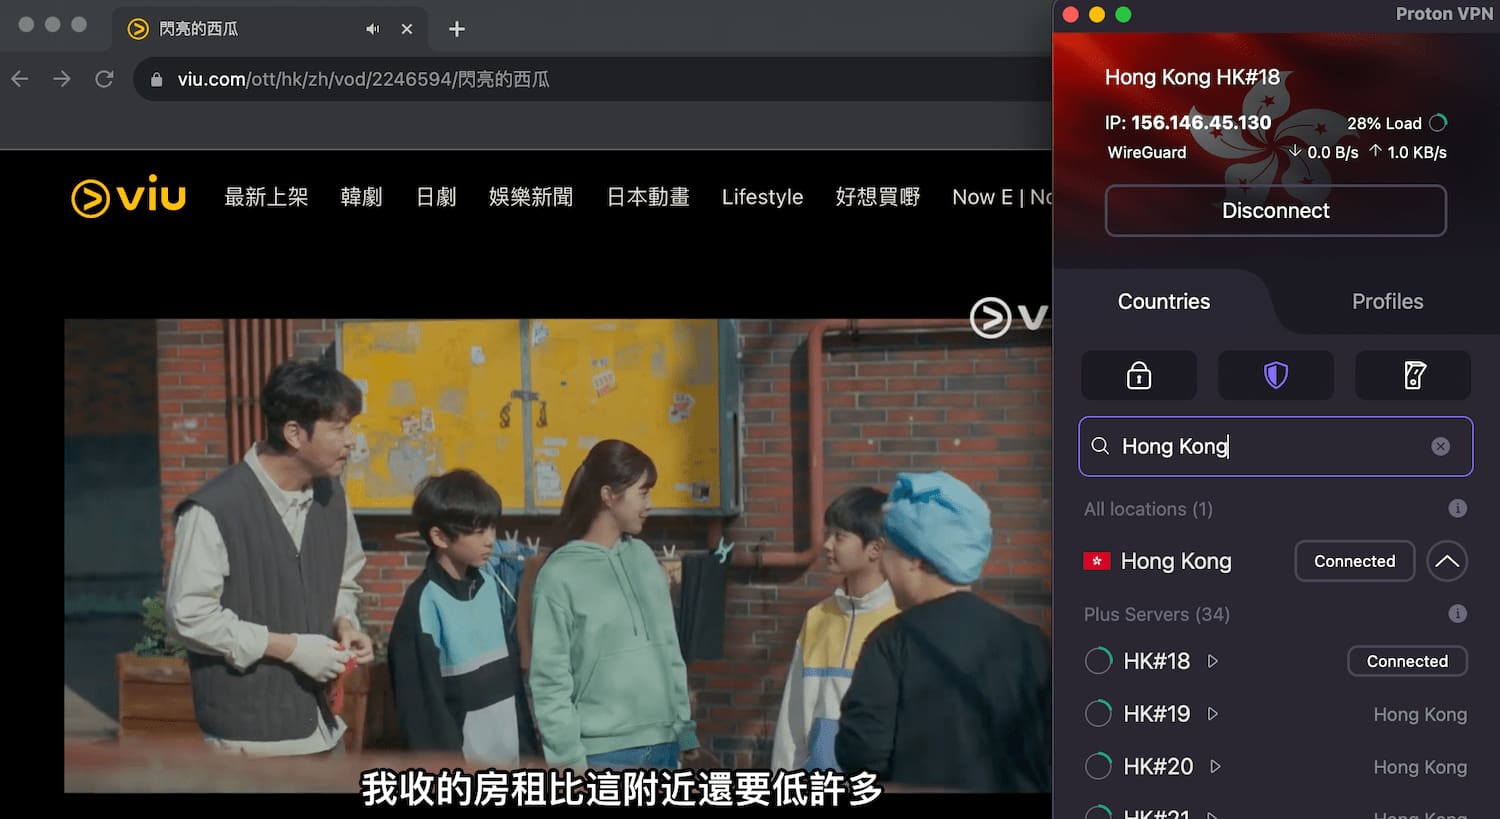 Streaming Viu connected to Proton VPN's Hong Kong server. 